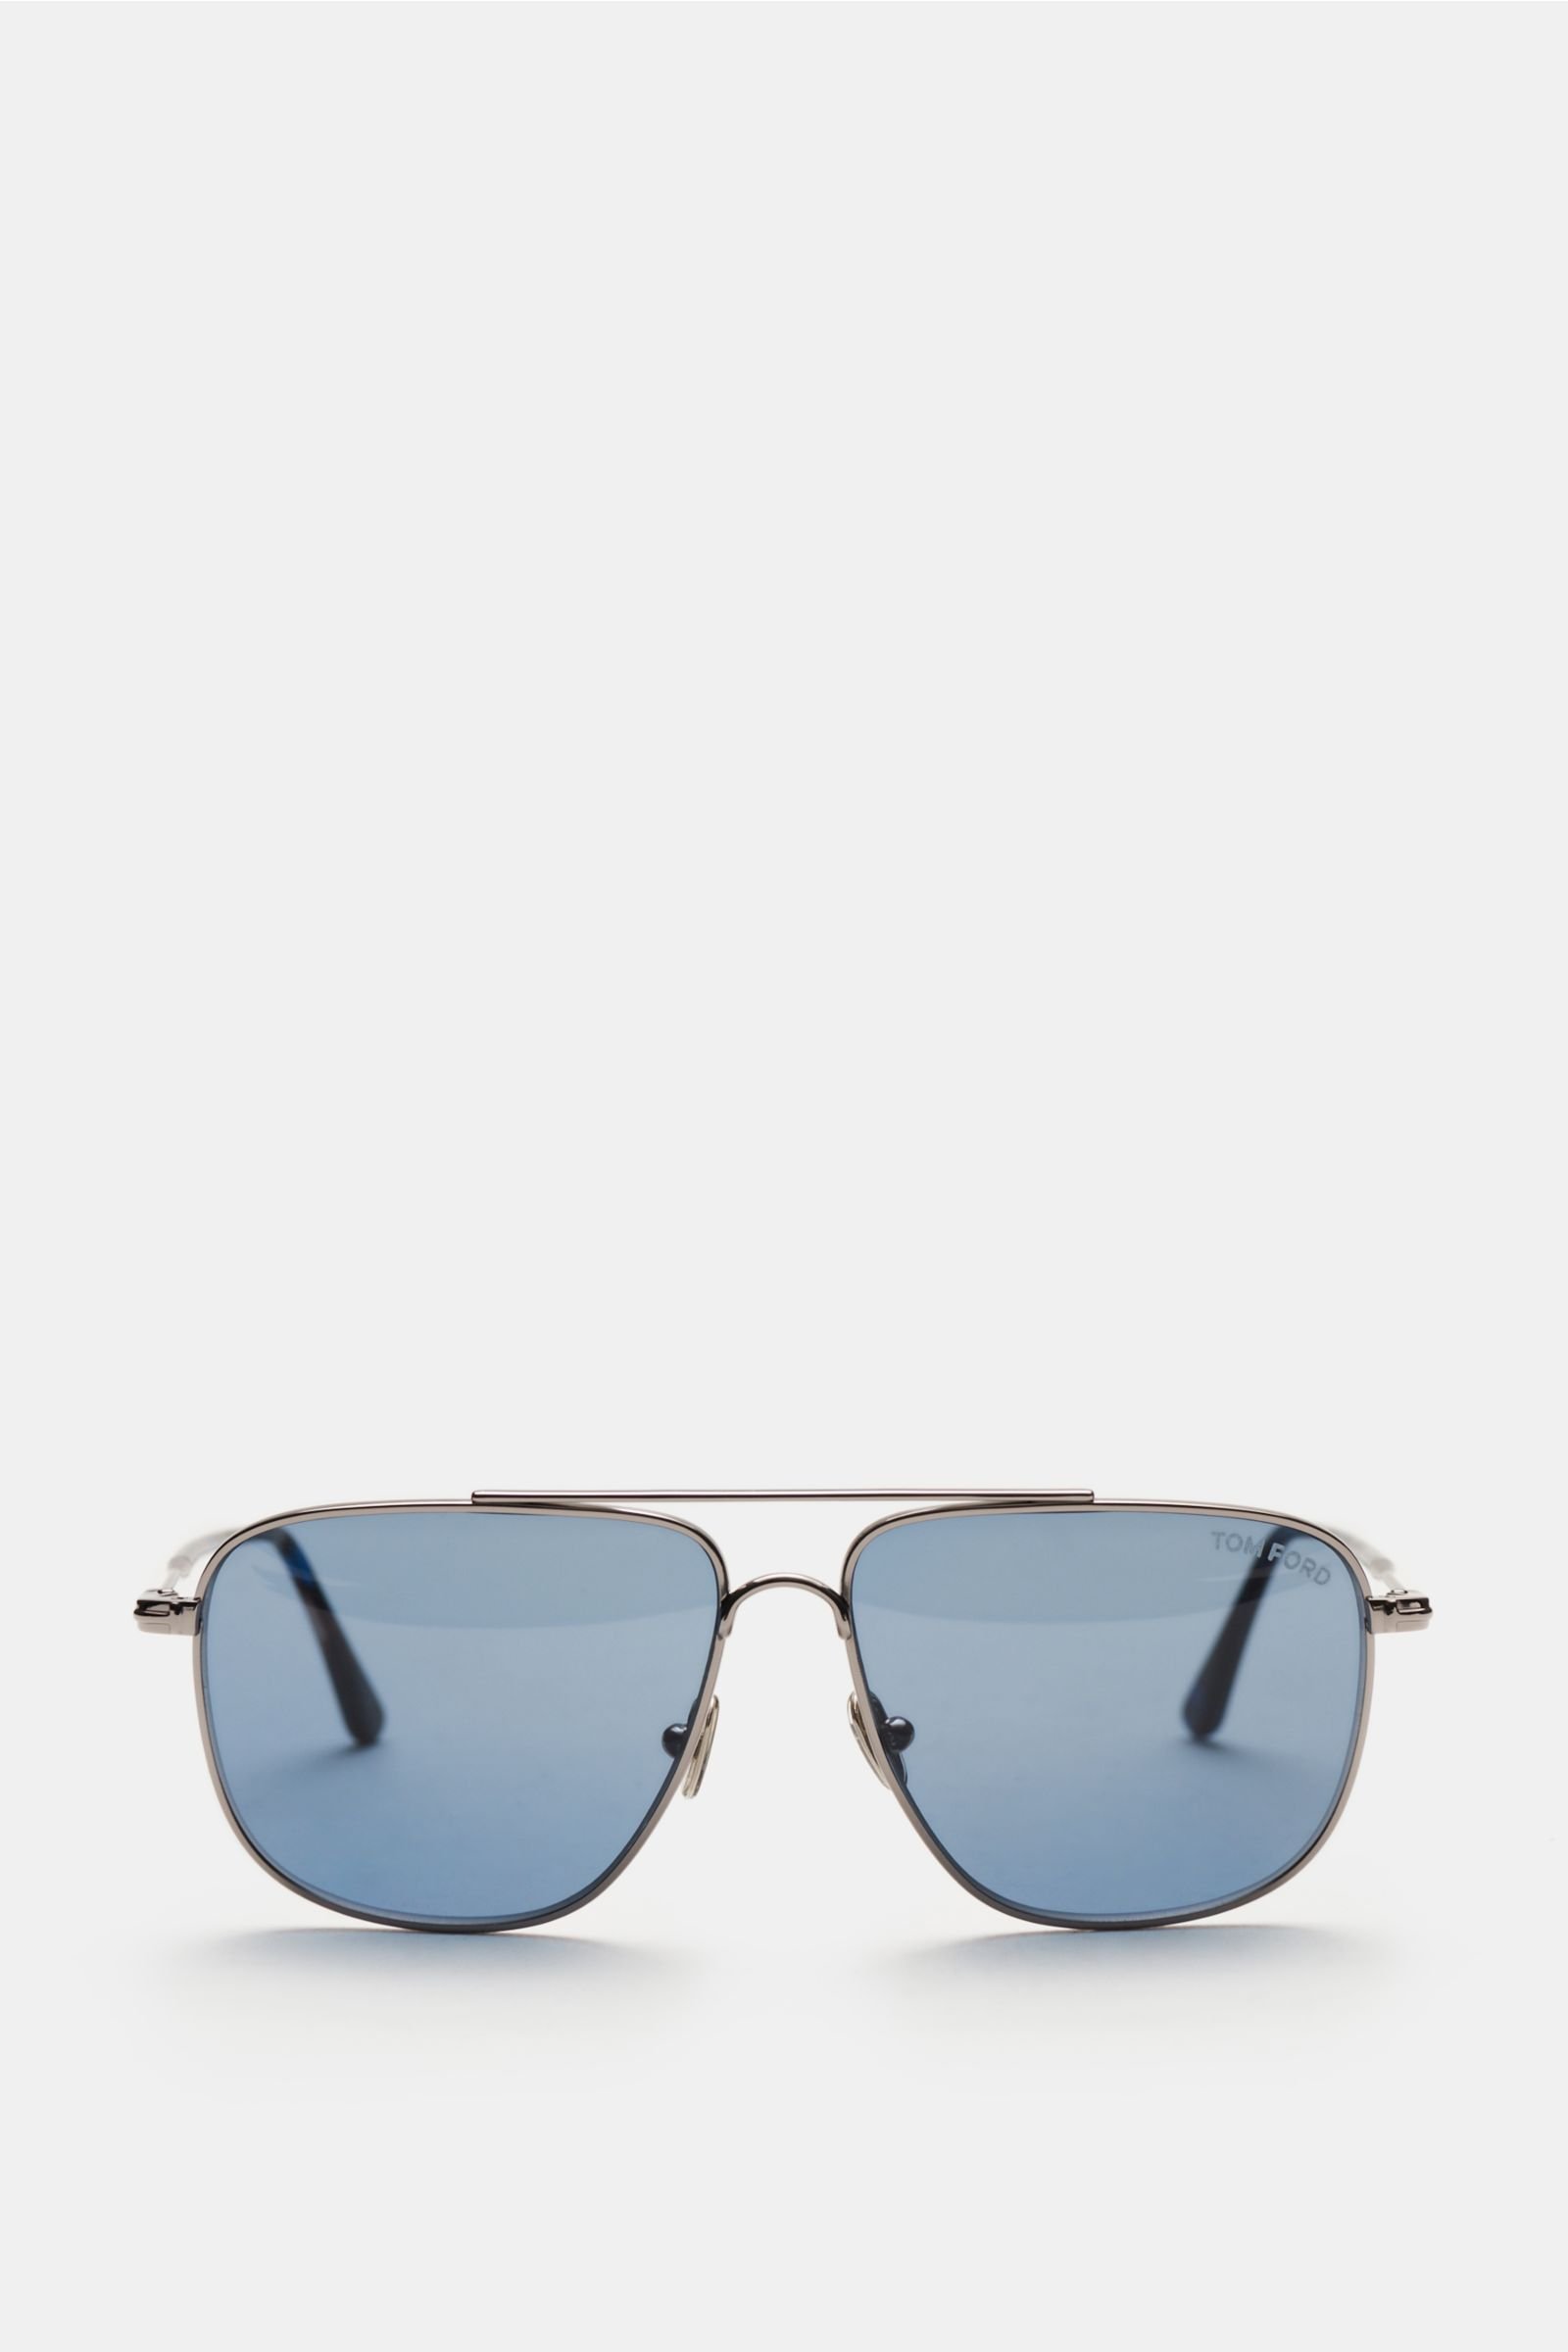 Sonnenbrille 'Len' silber/blau